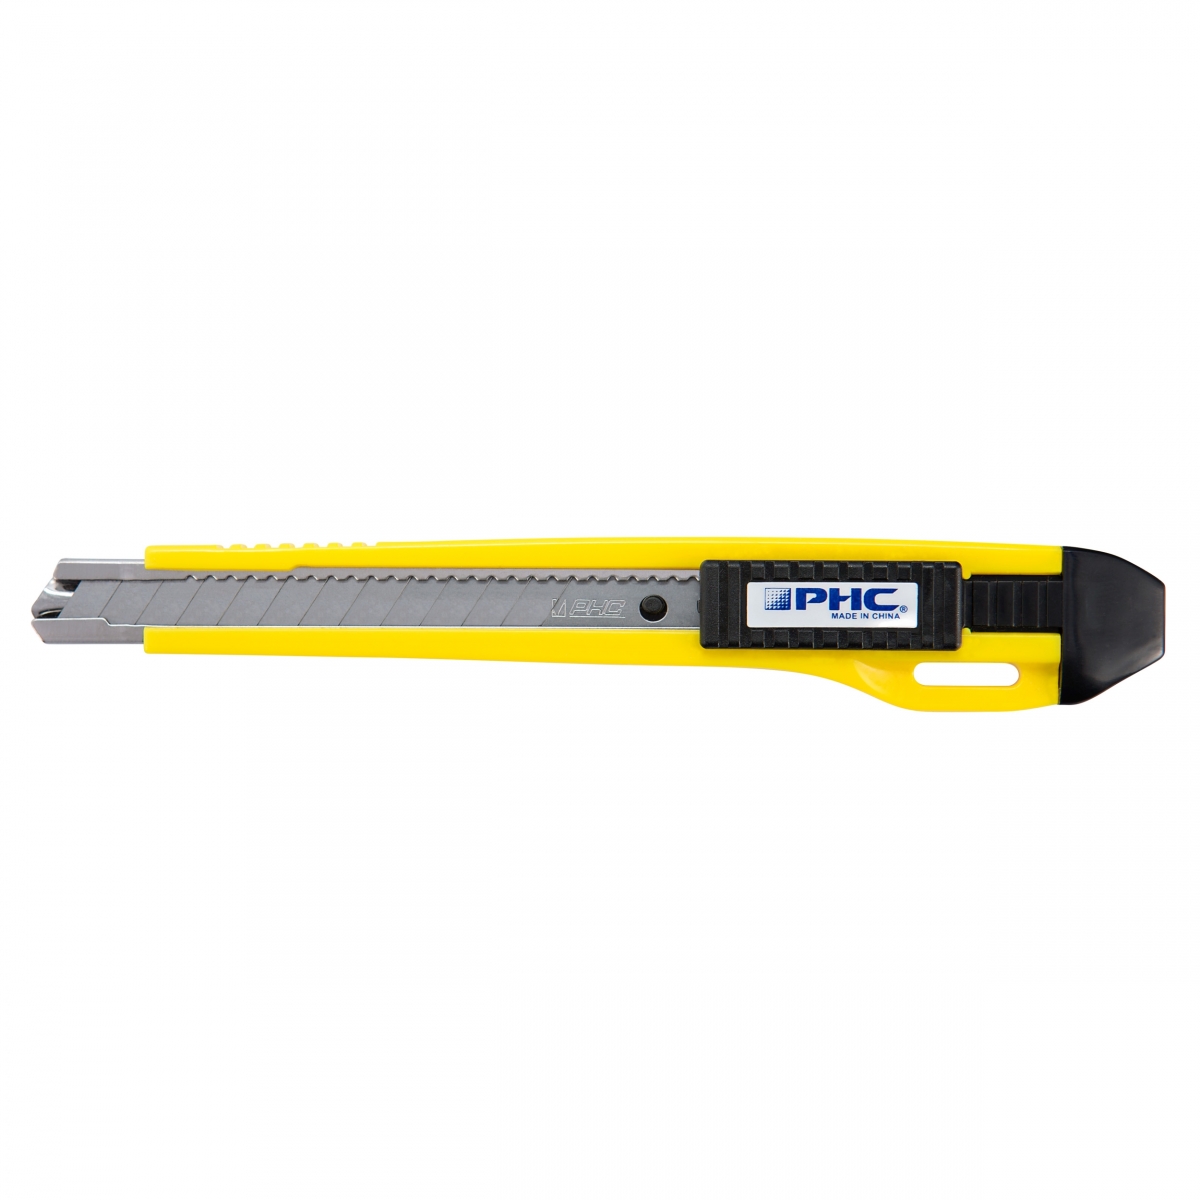 BIG- Pacific Handy Cutter, Cuttermesser BK-502, Farbe: gelb